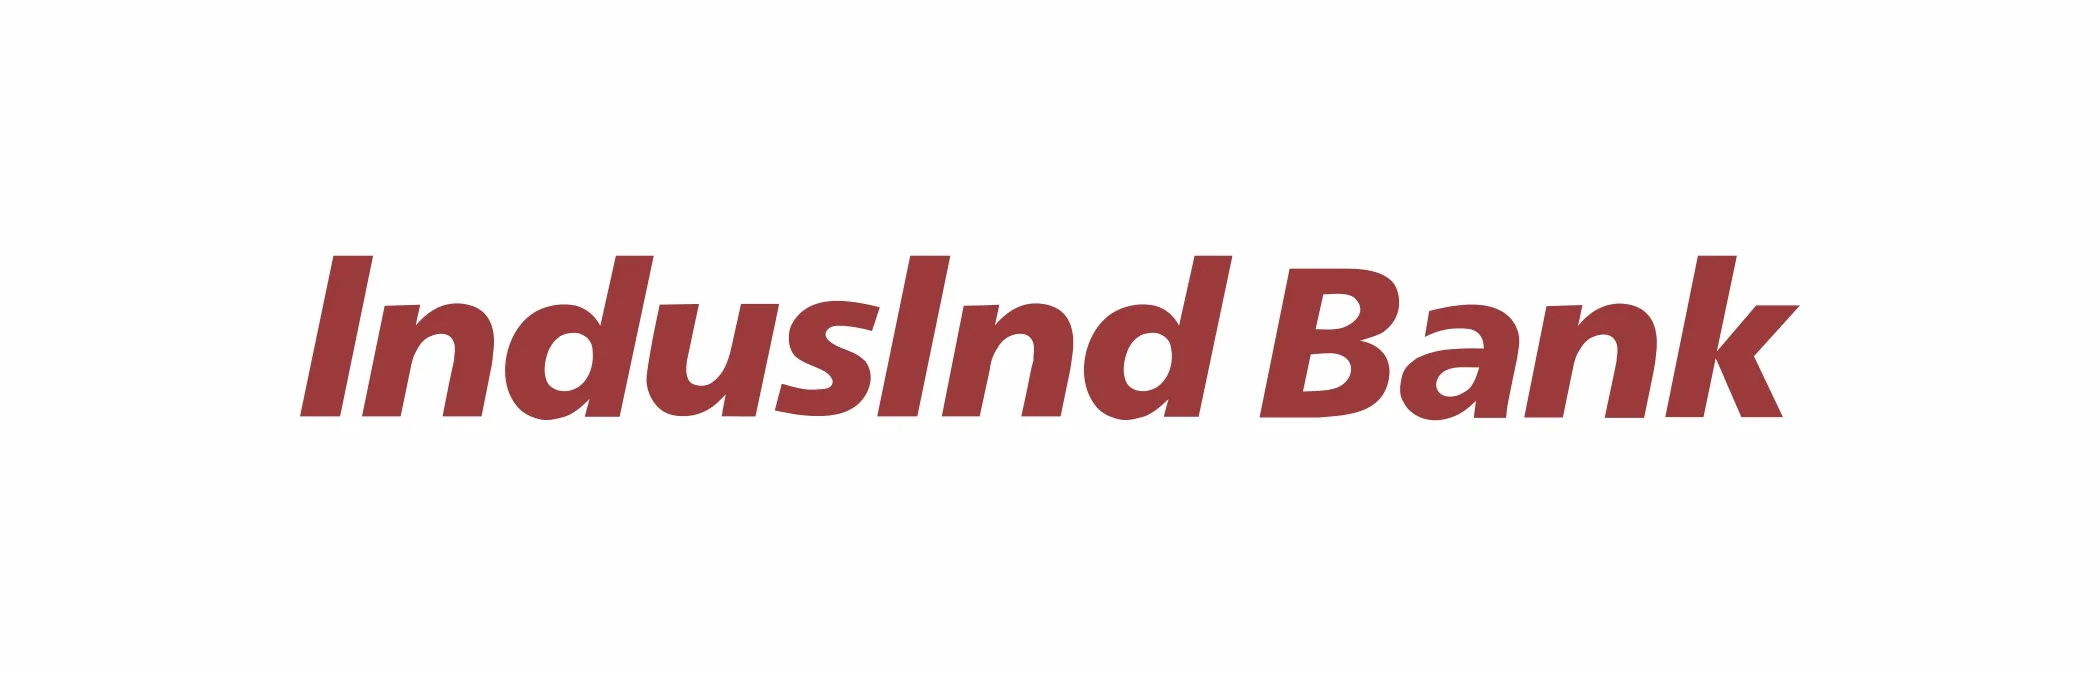 INDUSIND_bank_loan